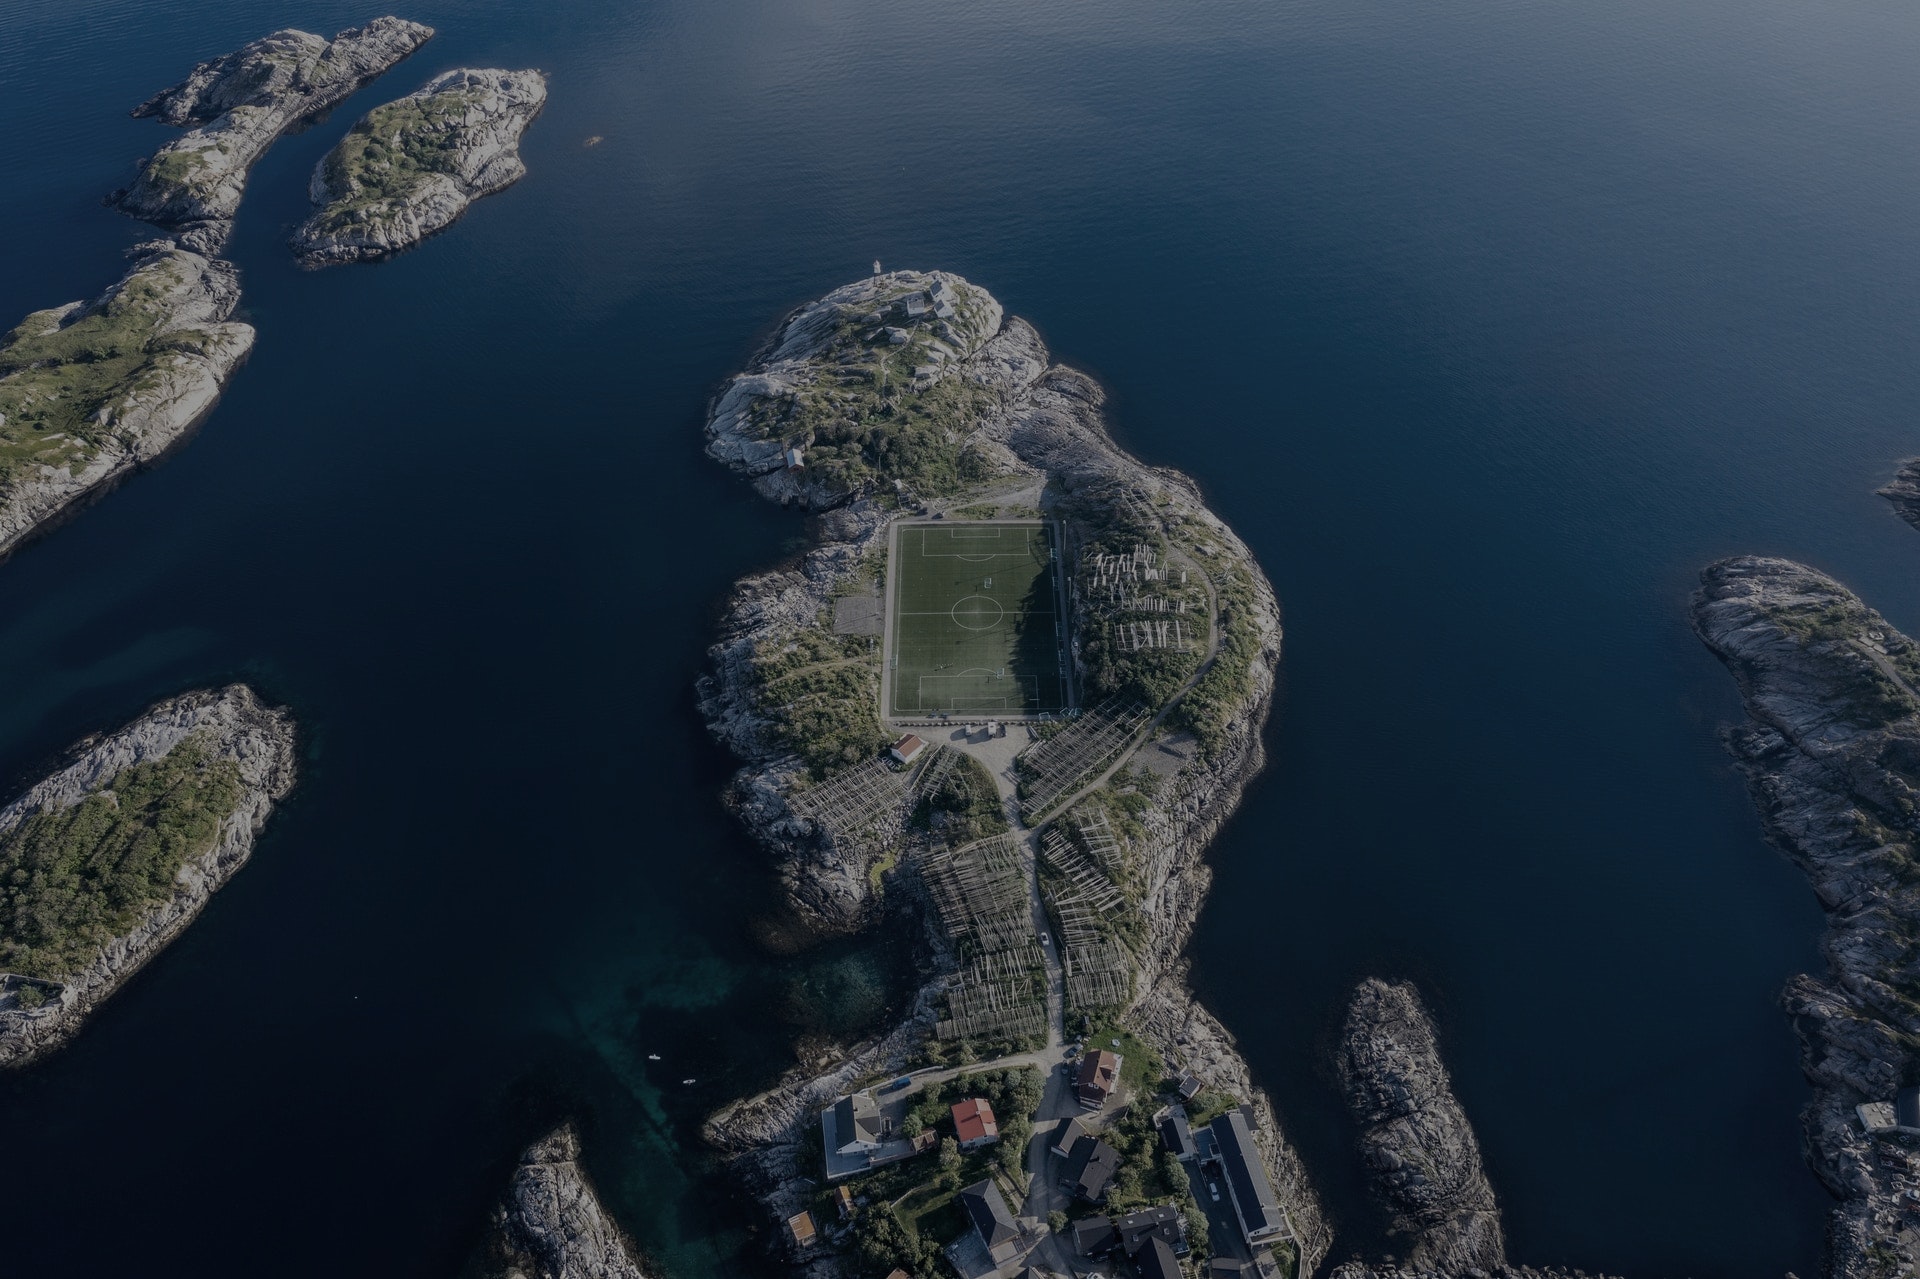 Football island